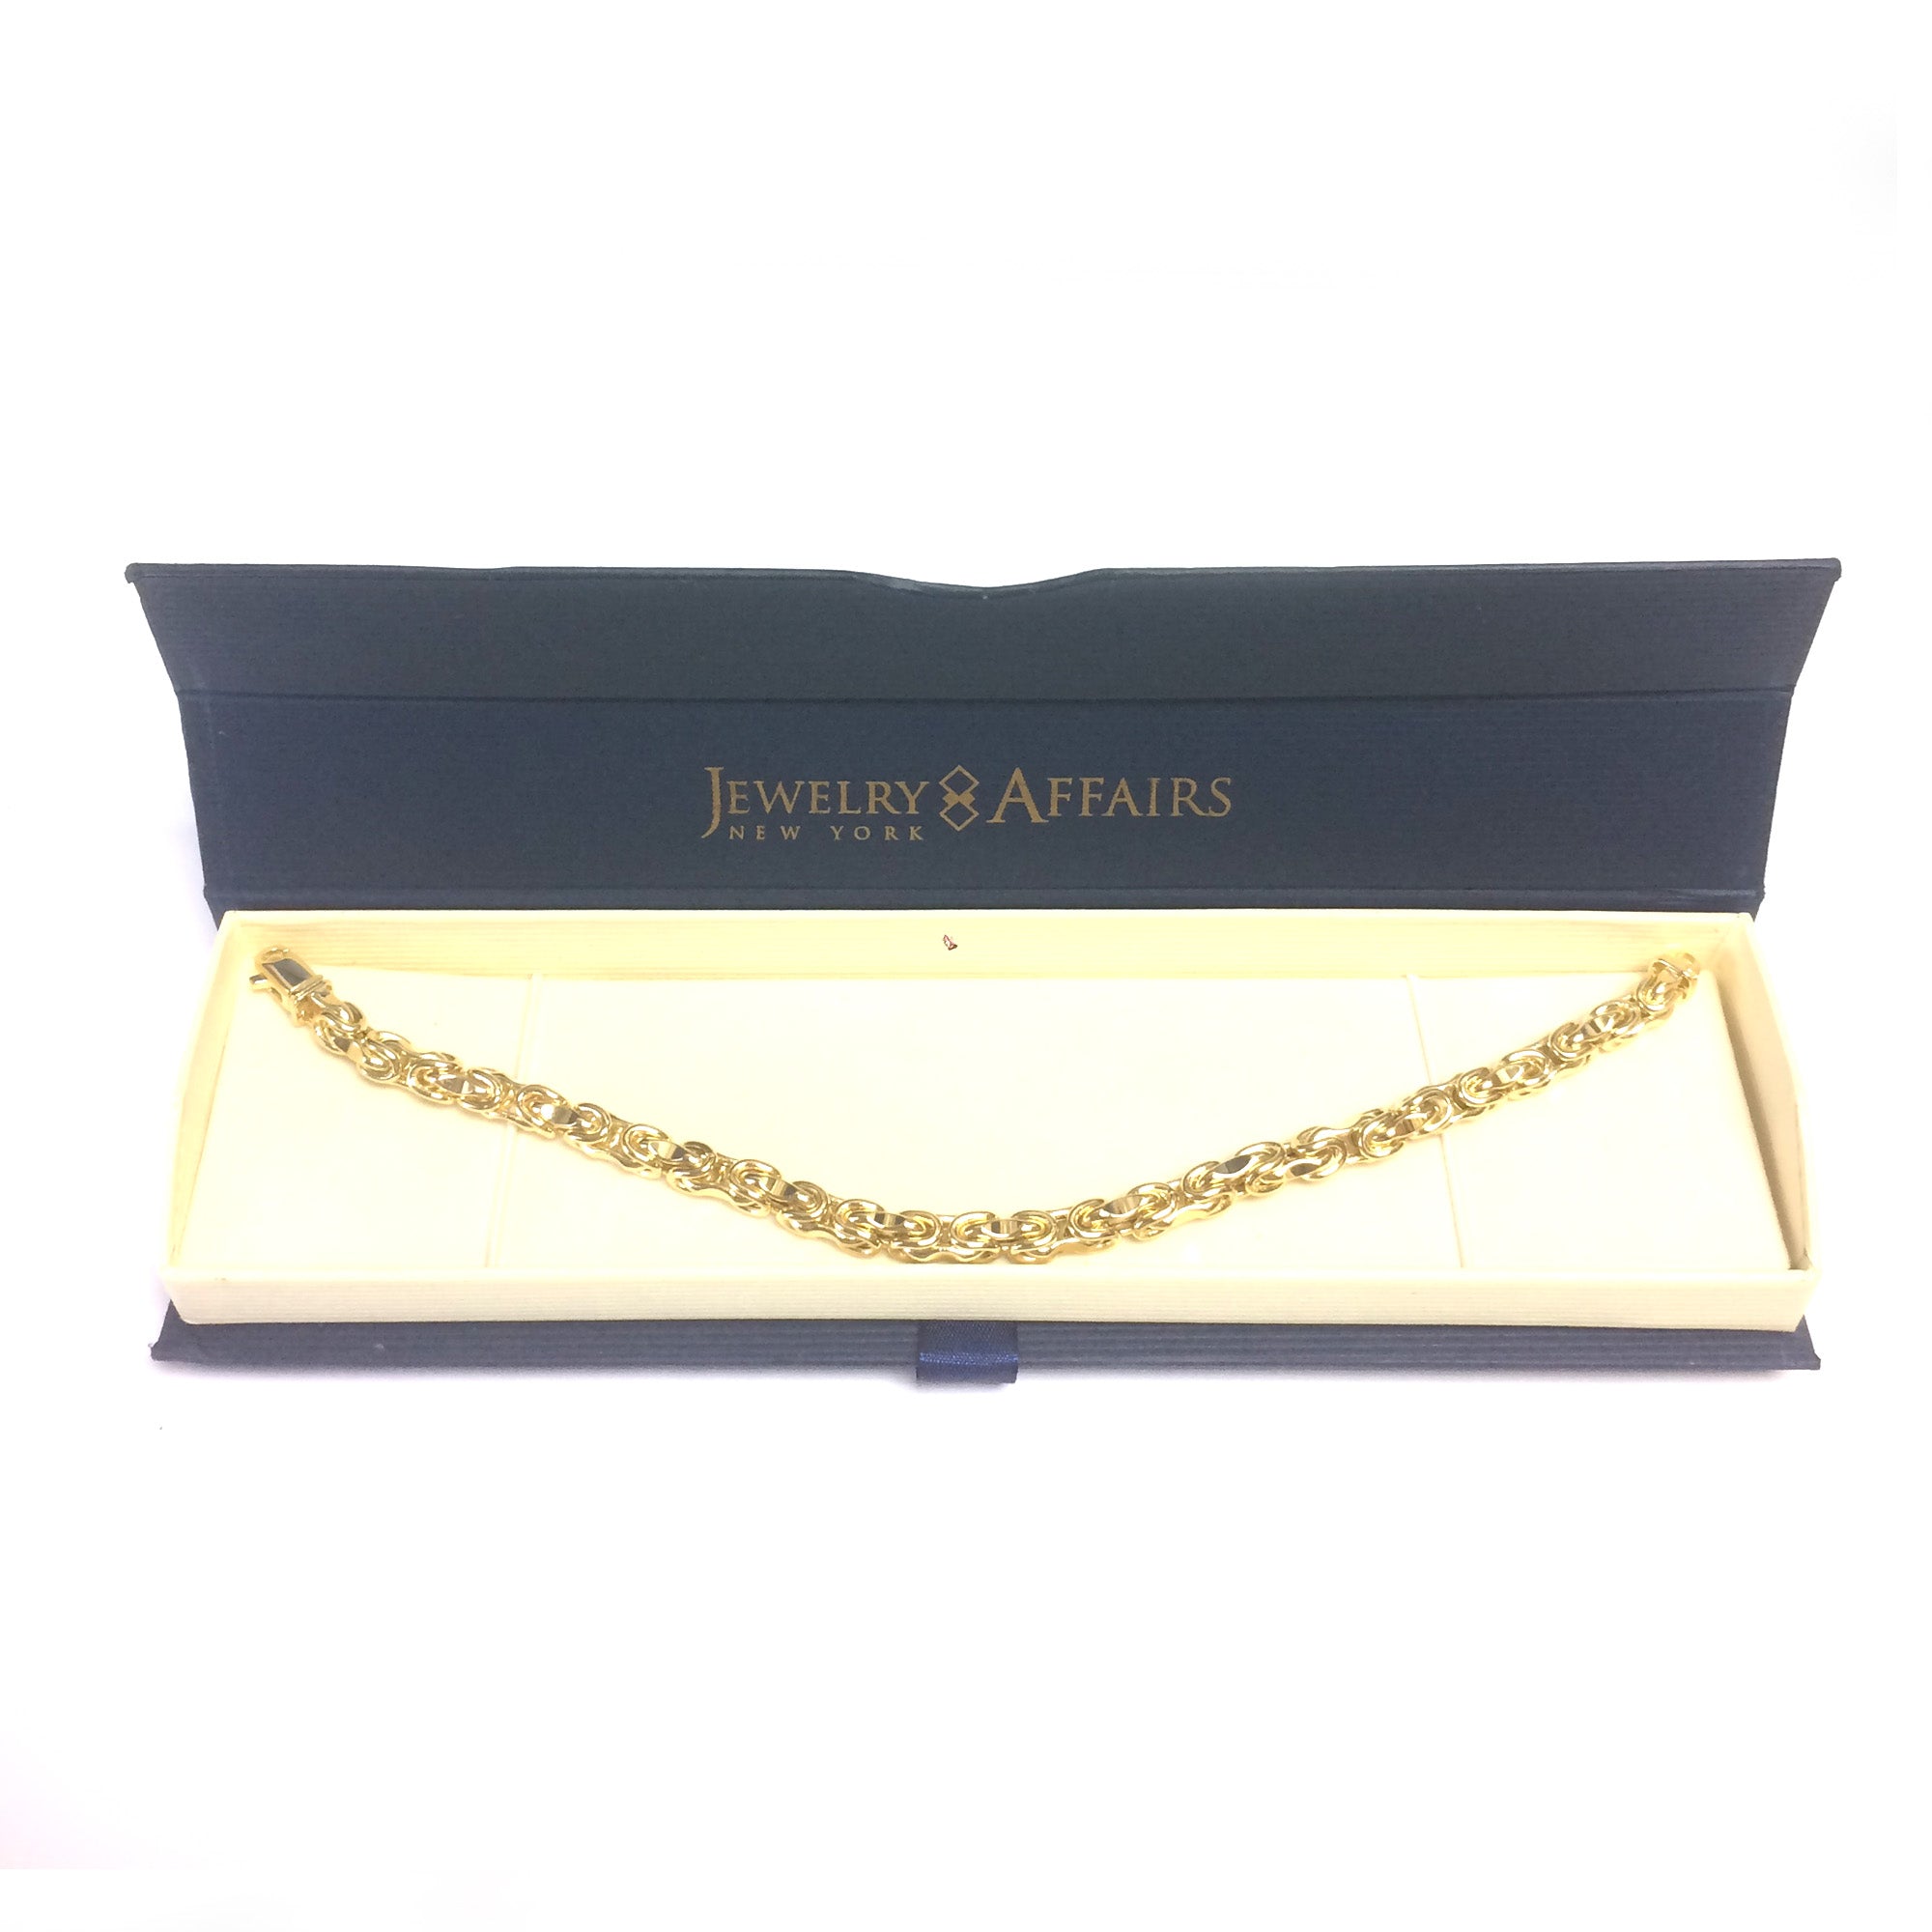 14k Yellow Gold Interconnected Link Mens Bracelet, 8.5" fine designer jewelry for men and women